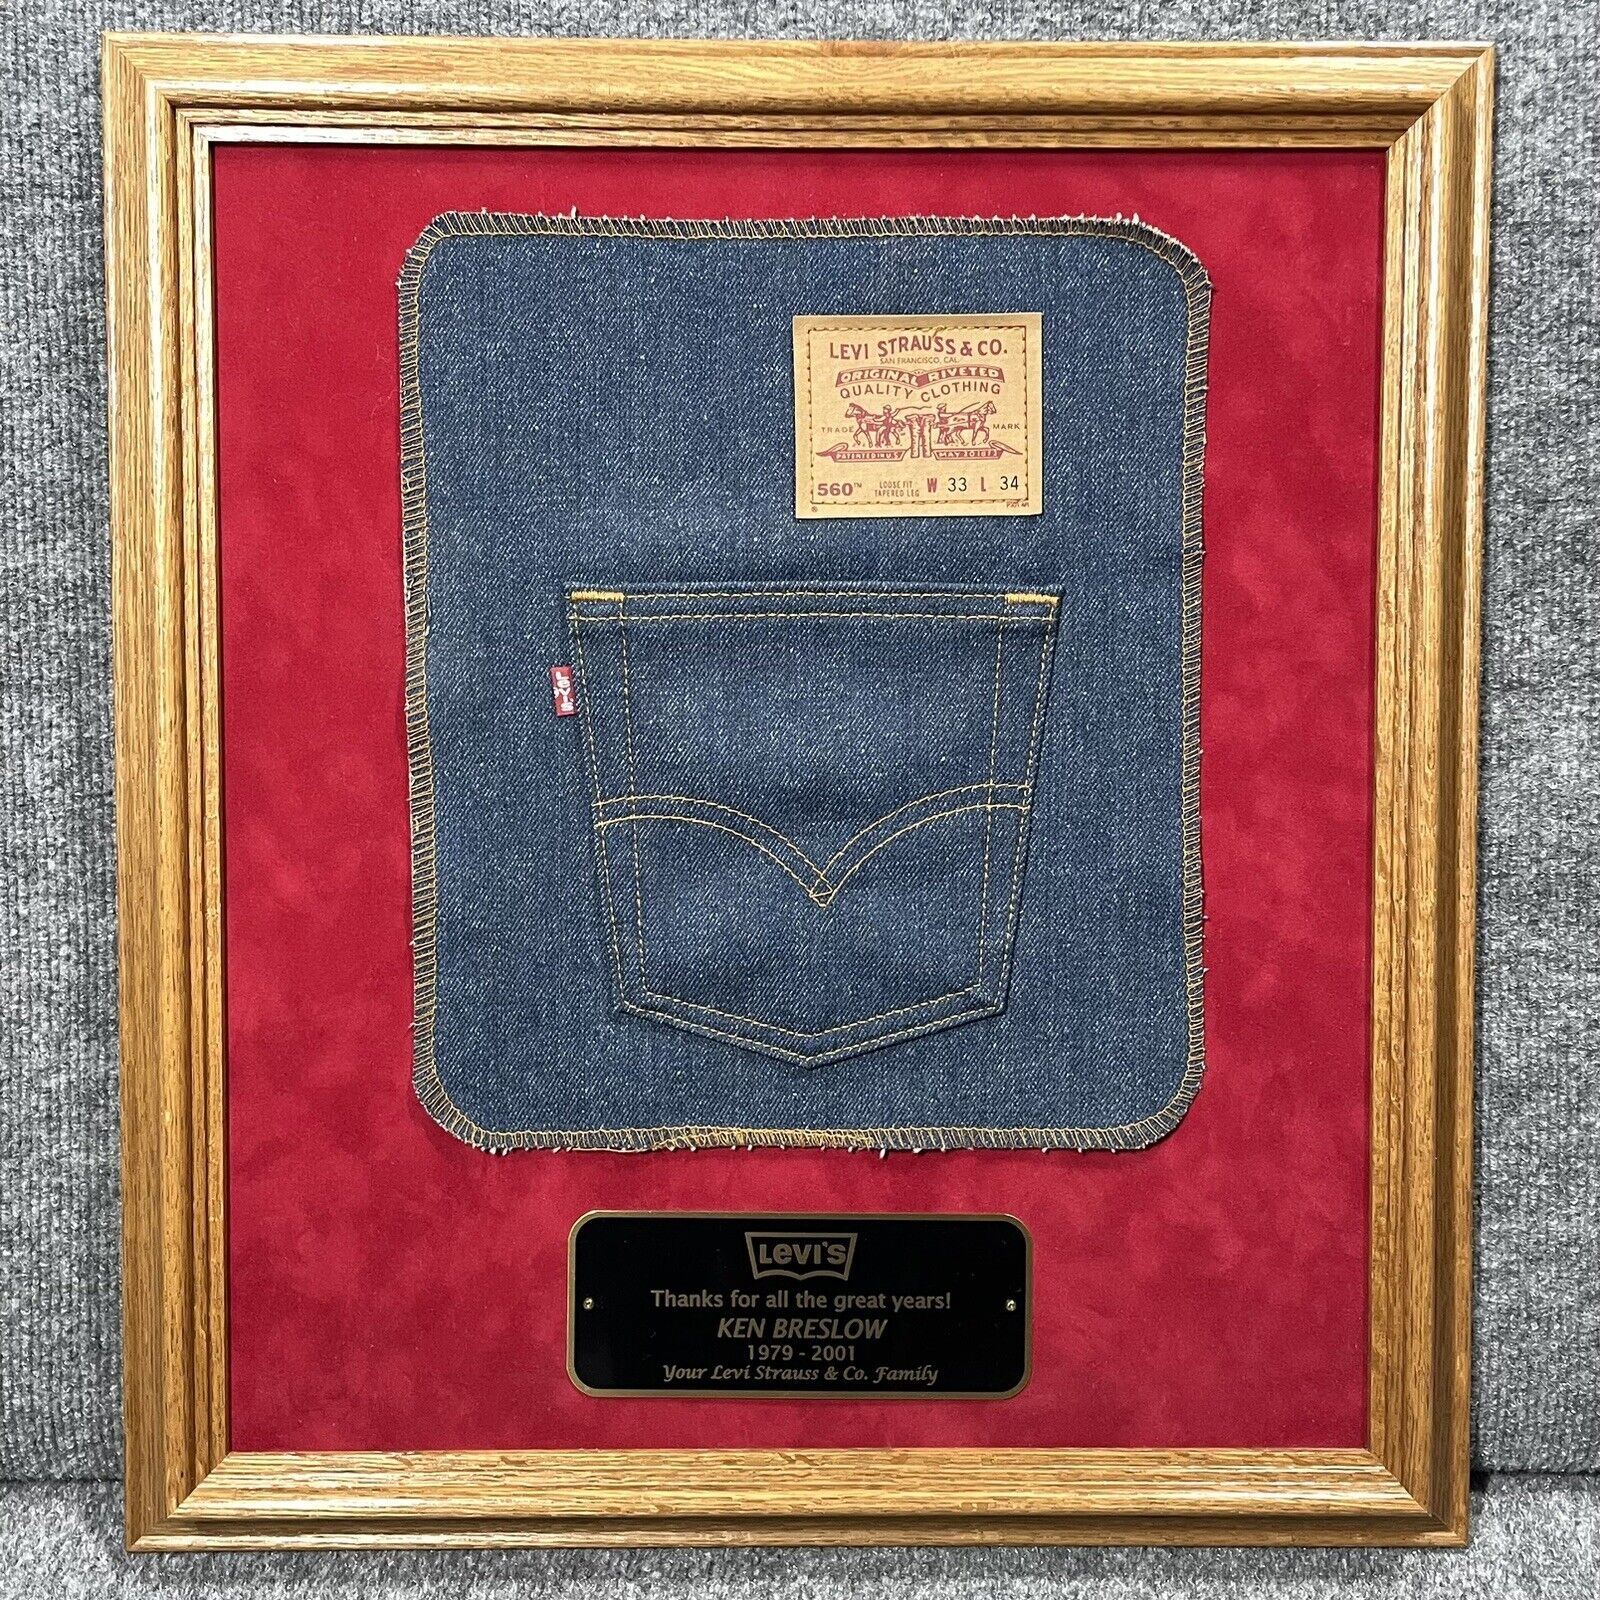 VINTAGE Levis Employee Retirement Award Denim Jeans Advertising Store Display